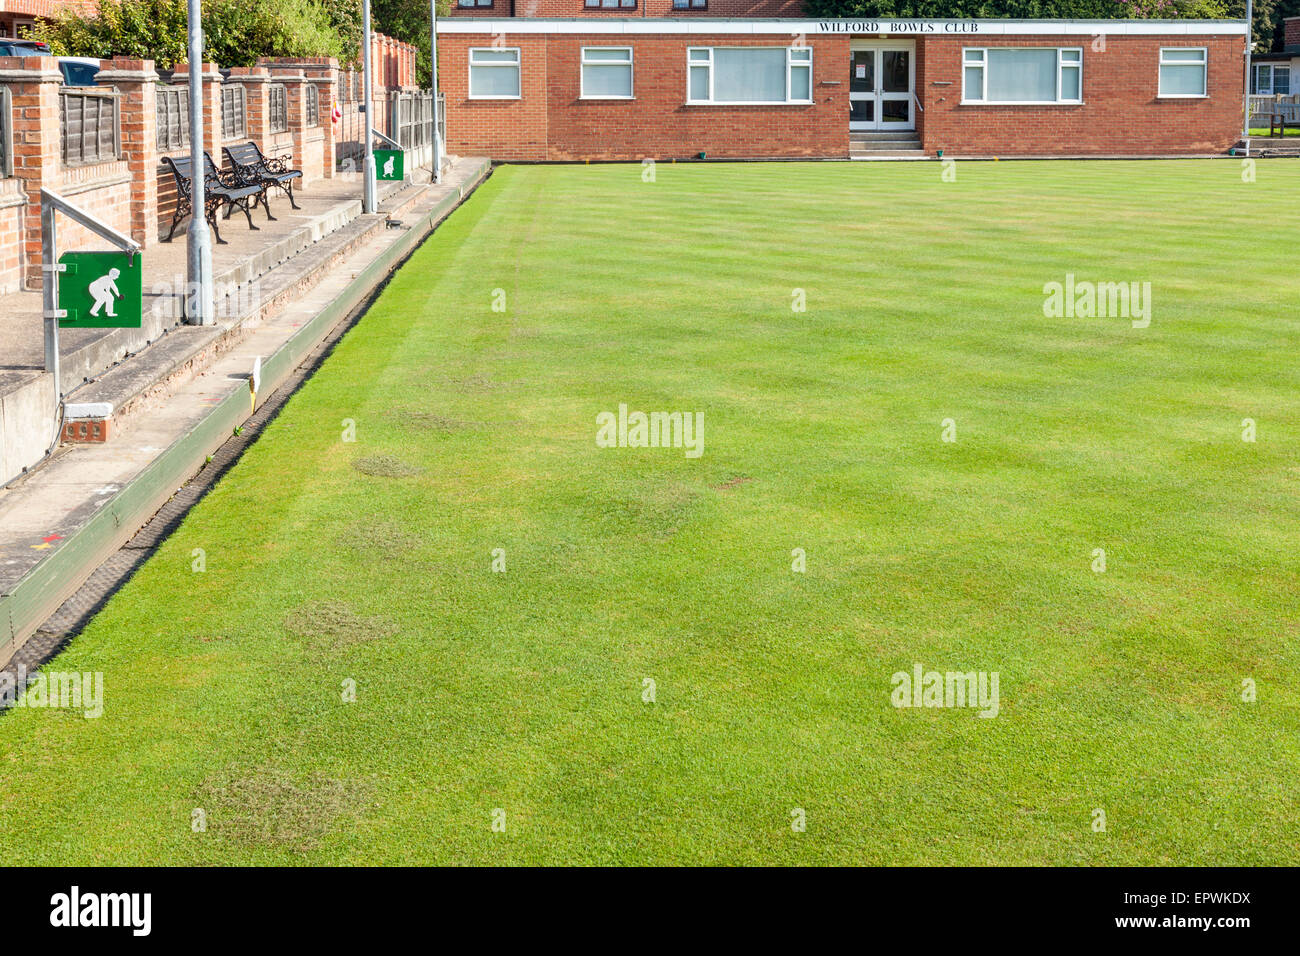 The bowling green or rink at Wilford Bowls Club, Wilford, Nottingham, England, UK Stock Photo